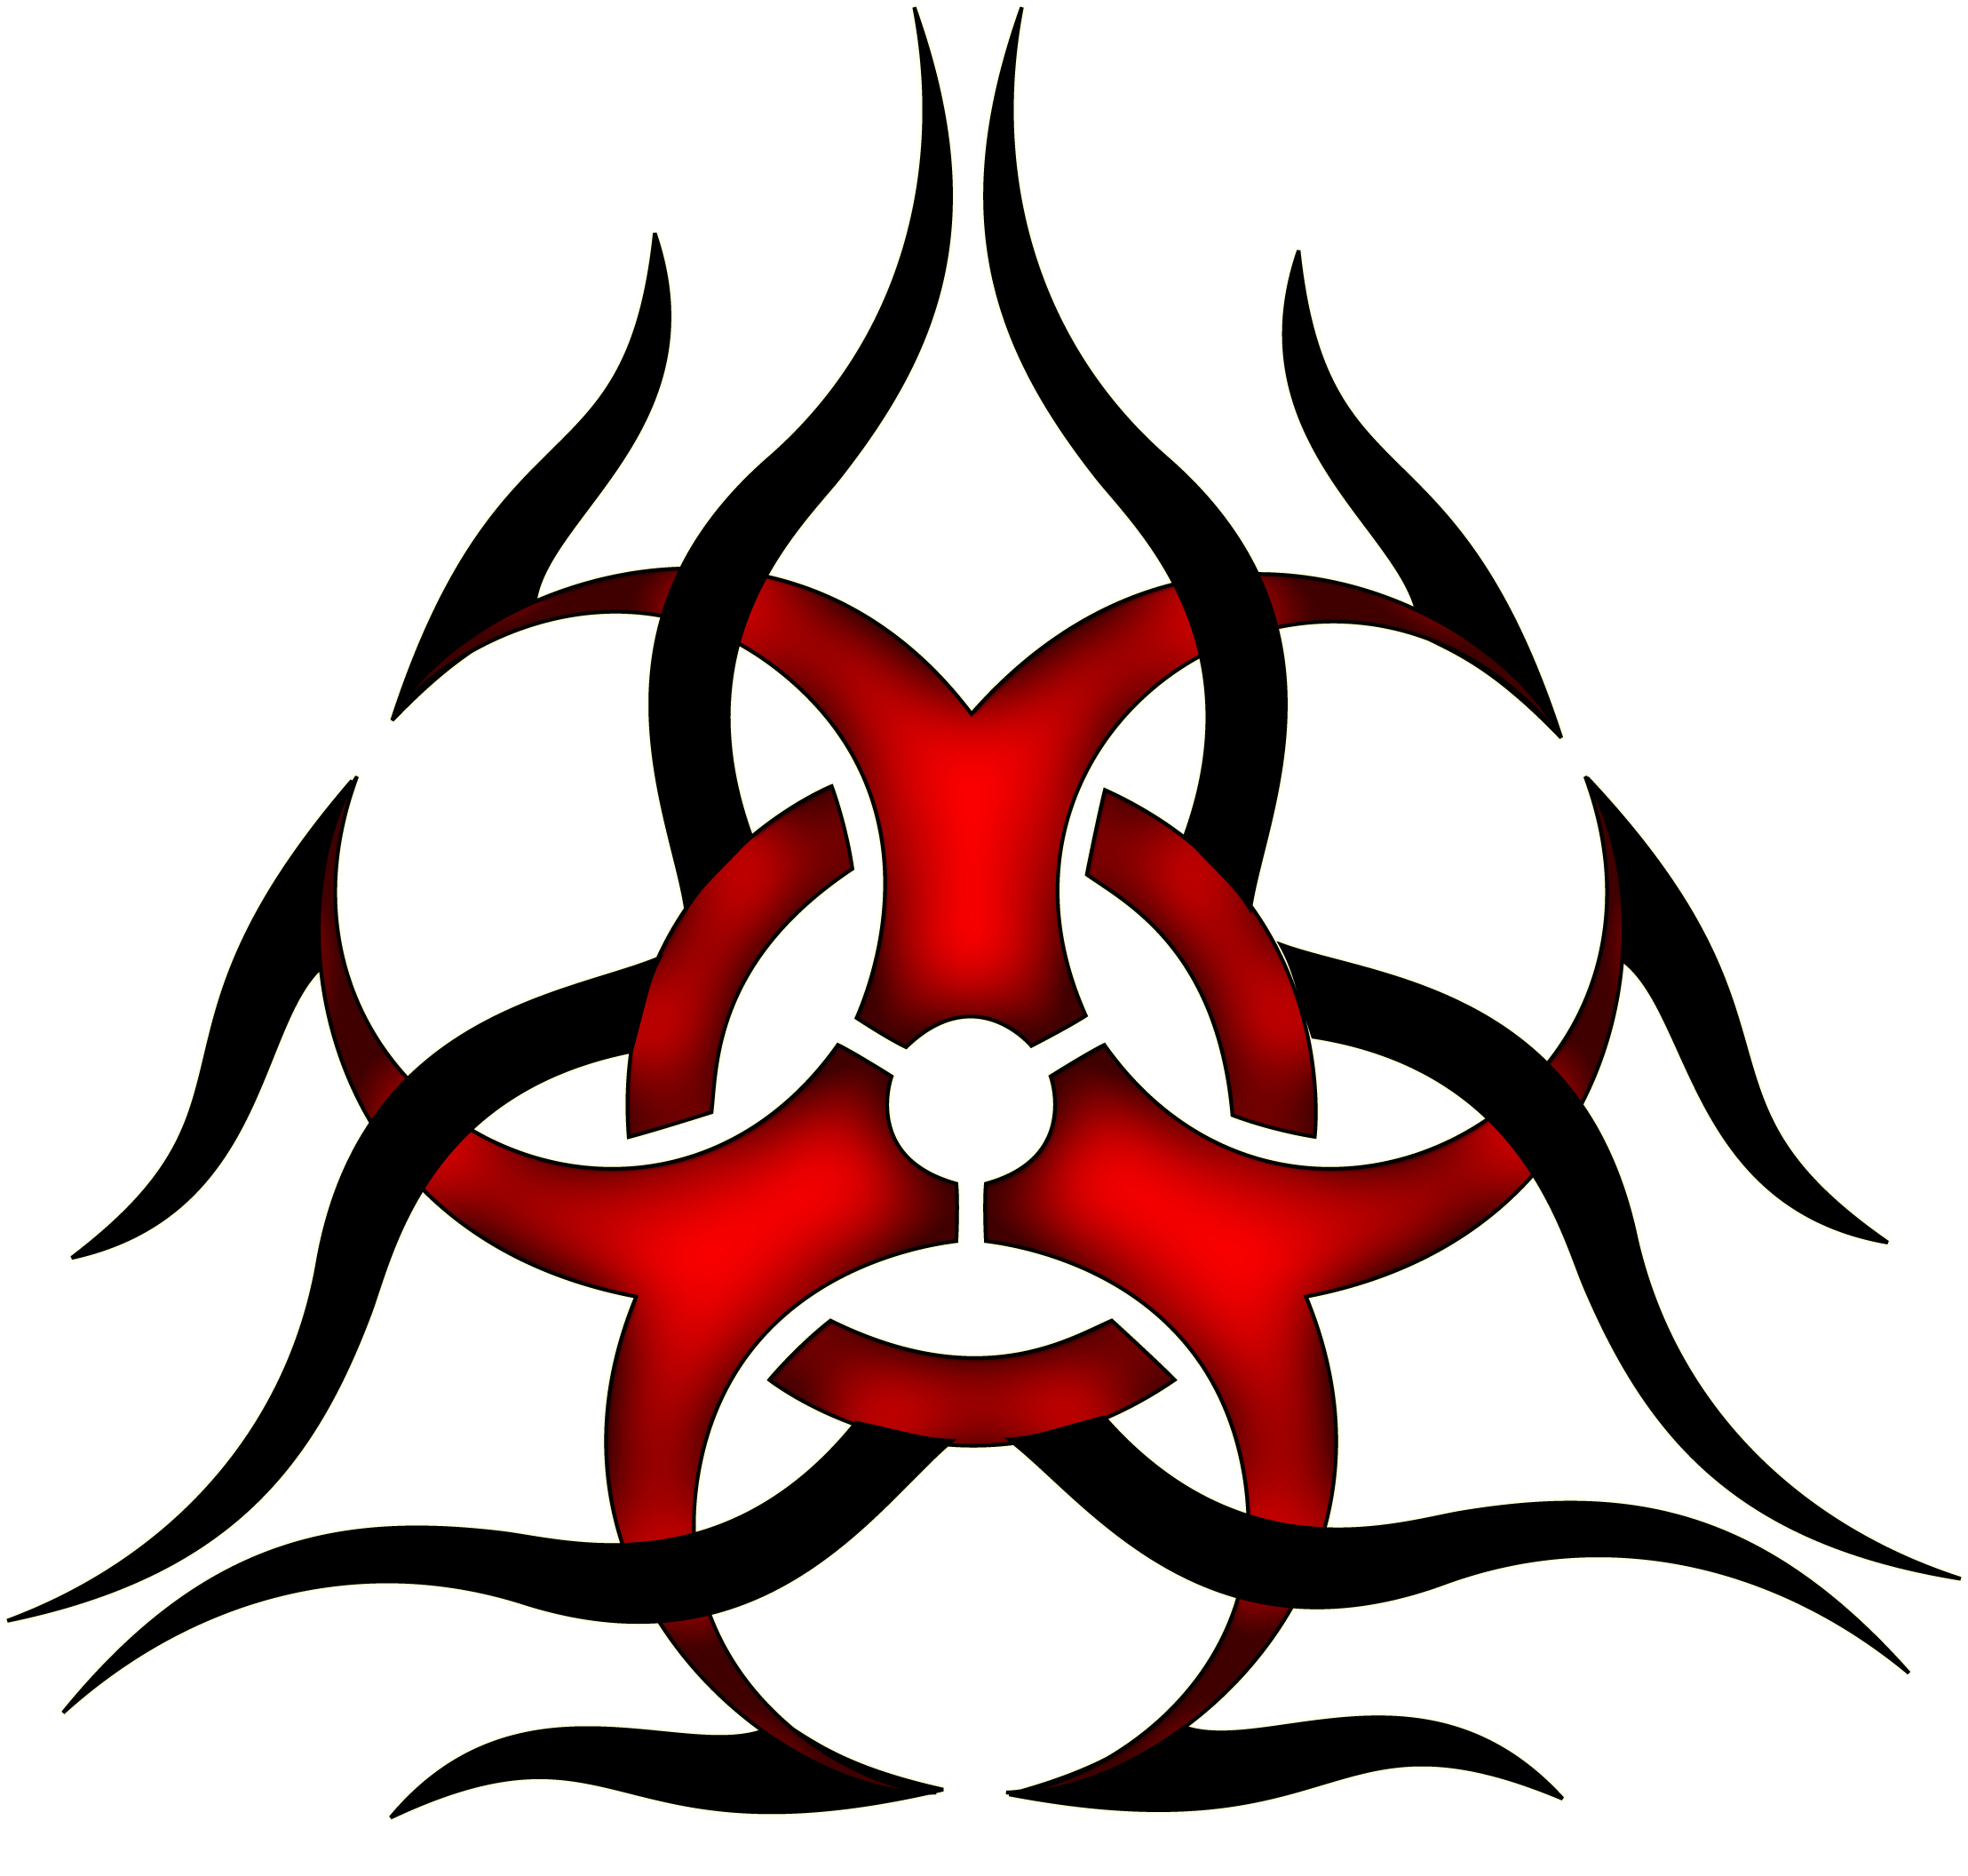 Tattoo symbol set Bio hazard radiation and peace symbols in tattoo style   CanStock